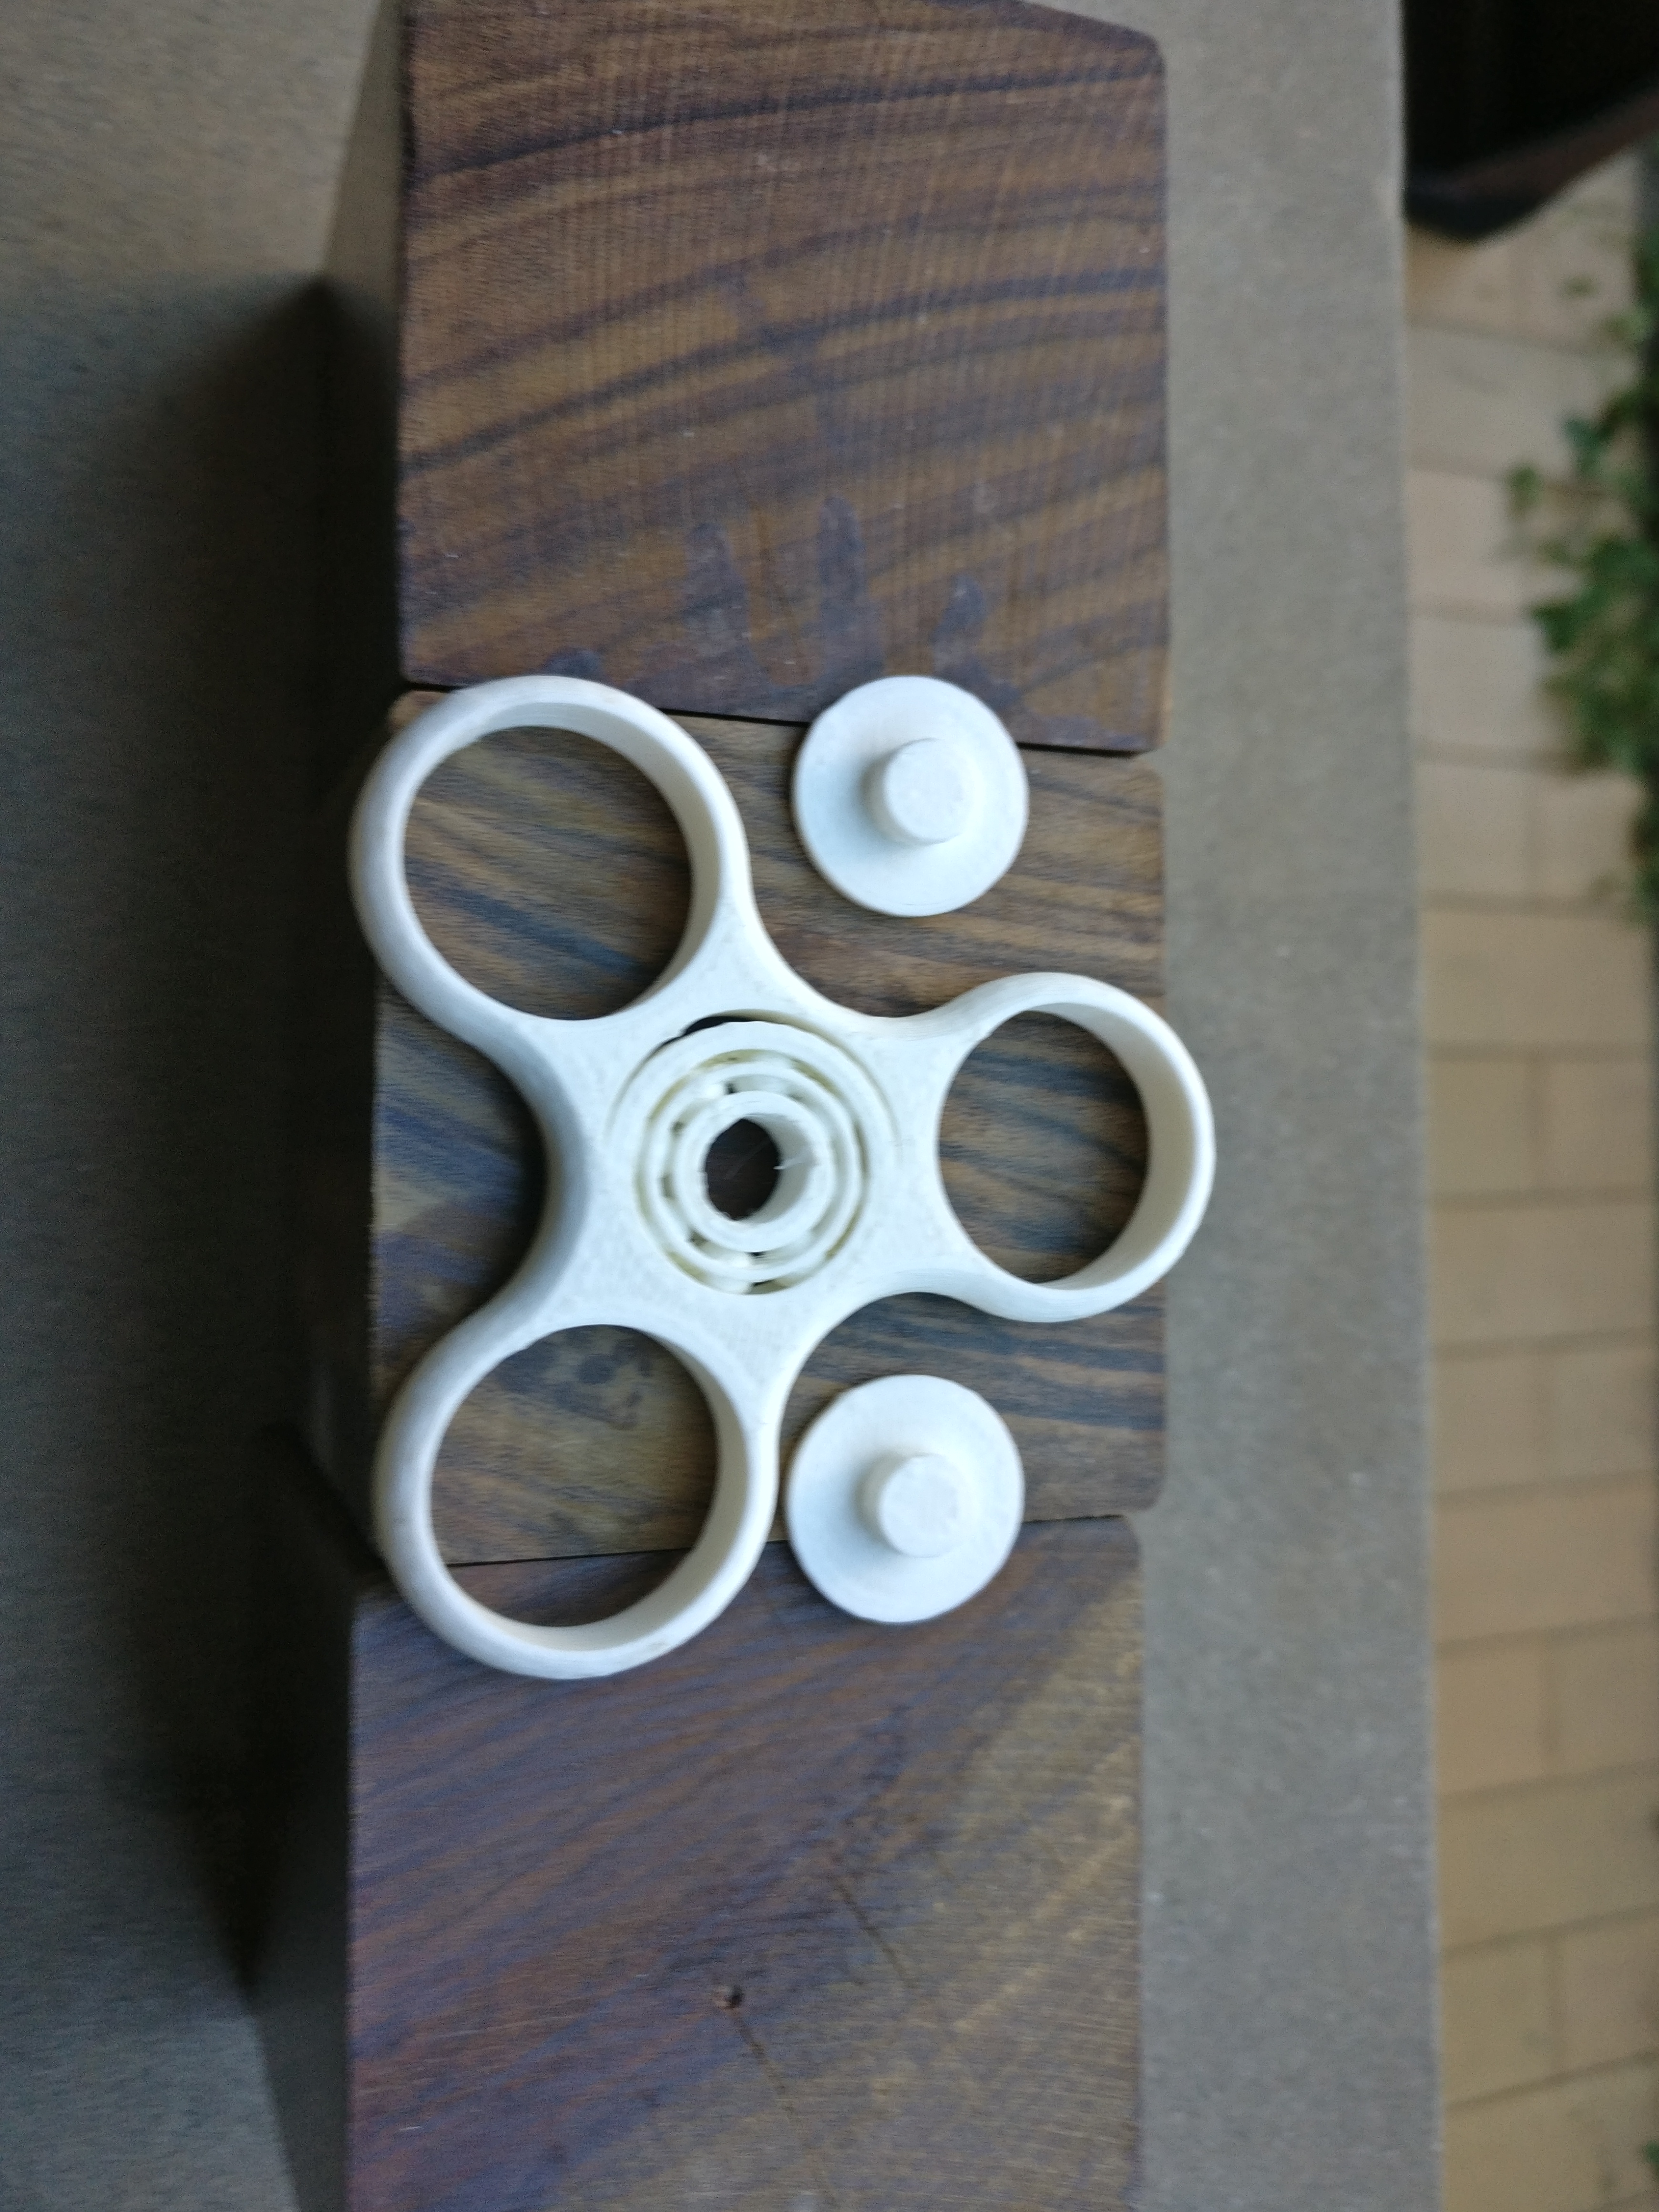 Copy of my fidget spinner image